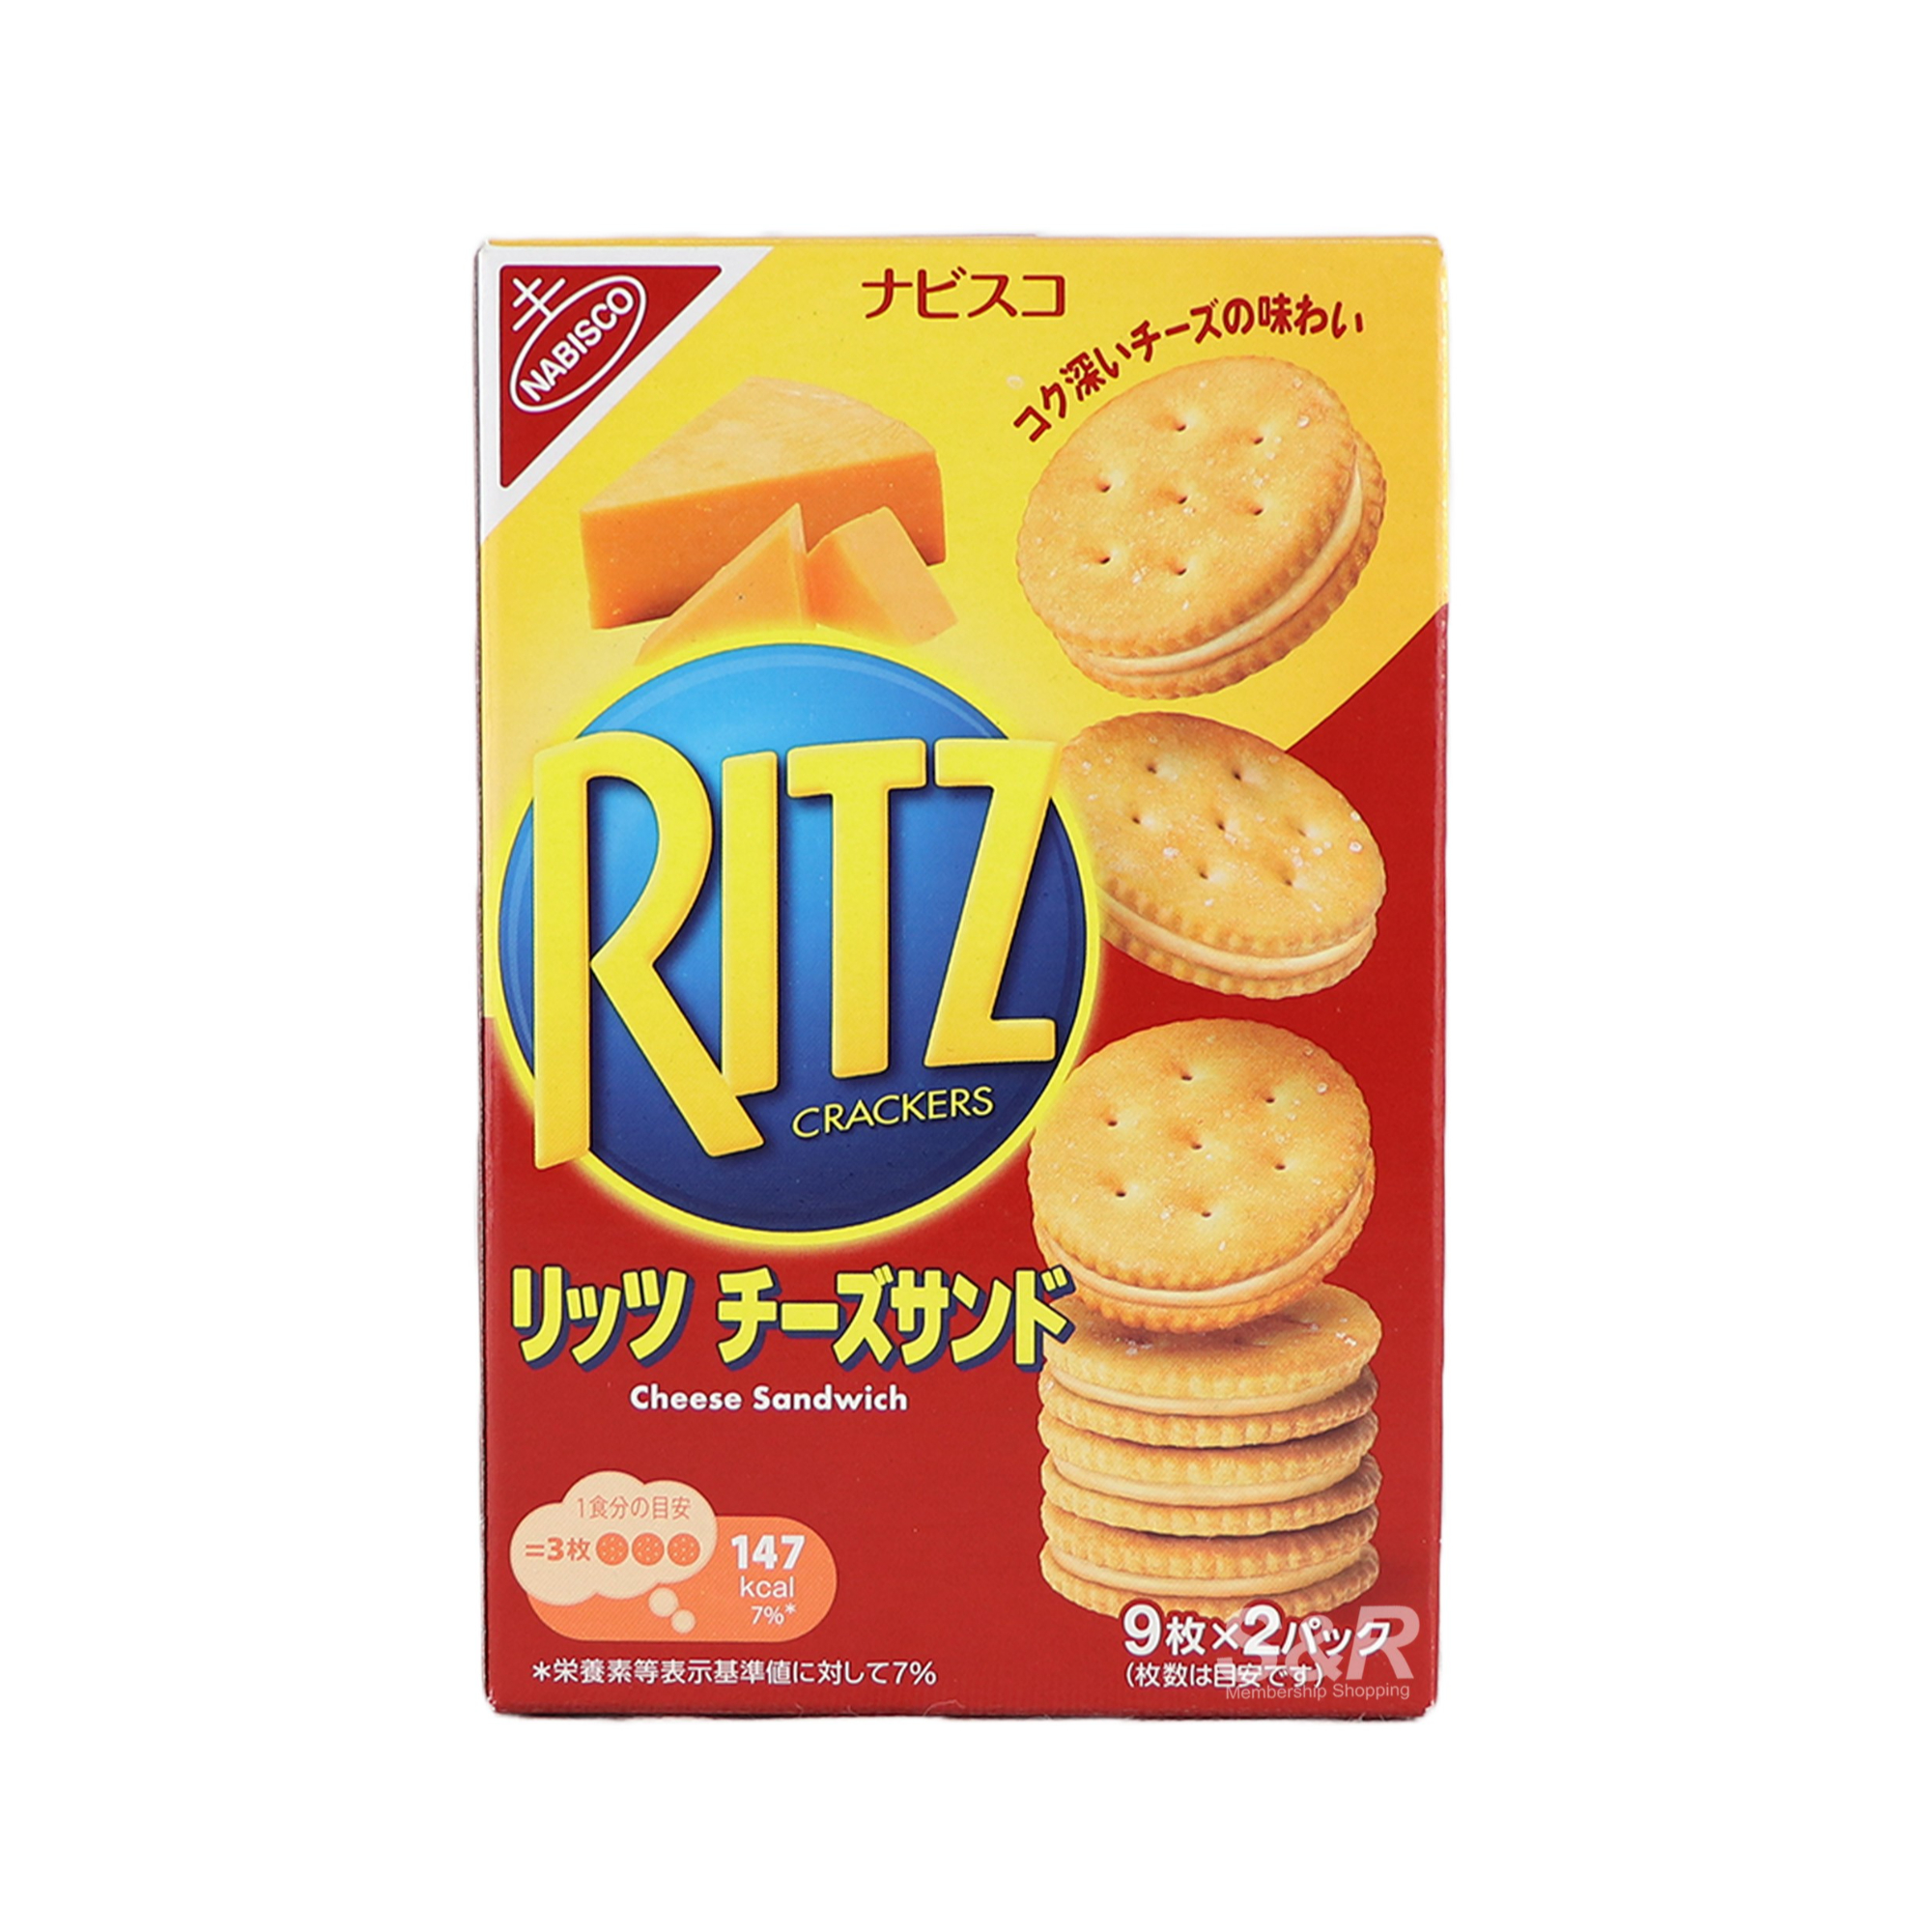 Ritz Crackers Cheese Sandwich 160g